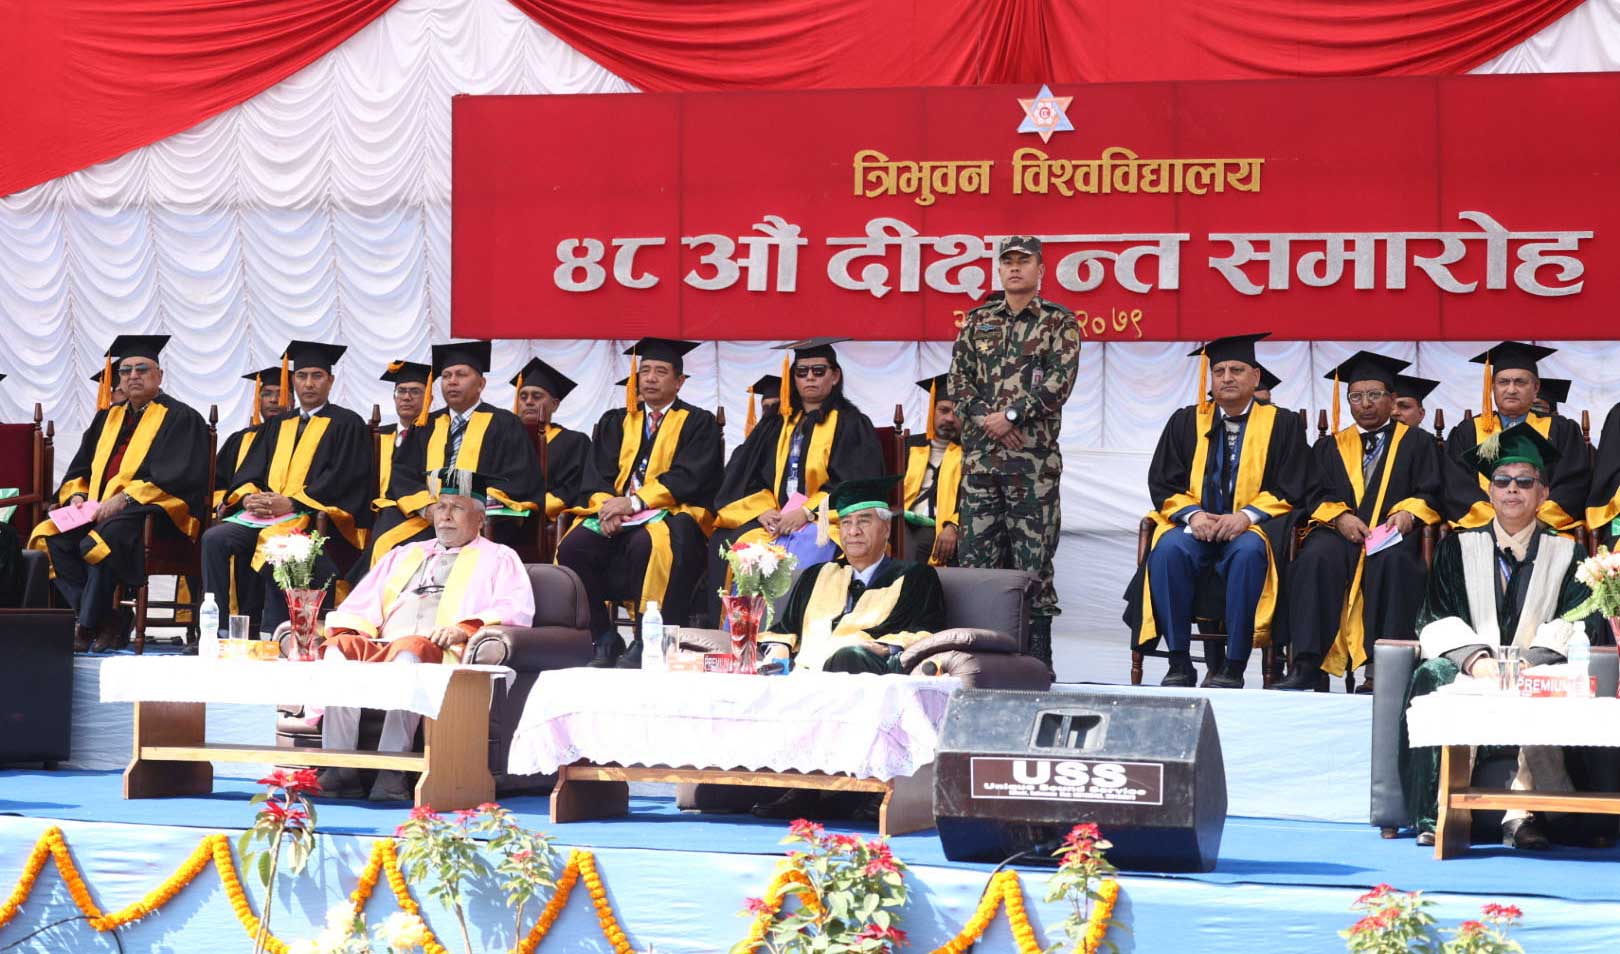 48th Convocation Ceremony of Tribhuvan University Concludes